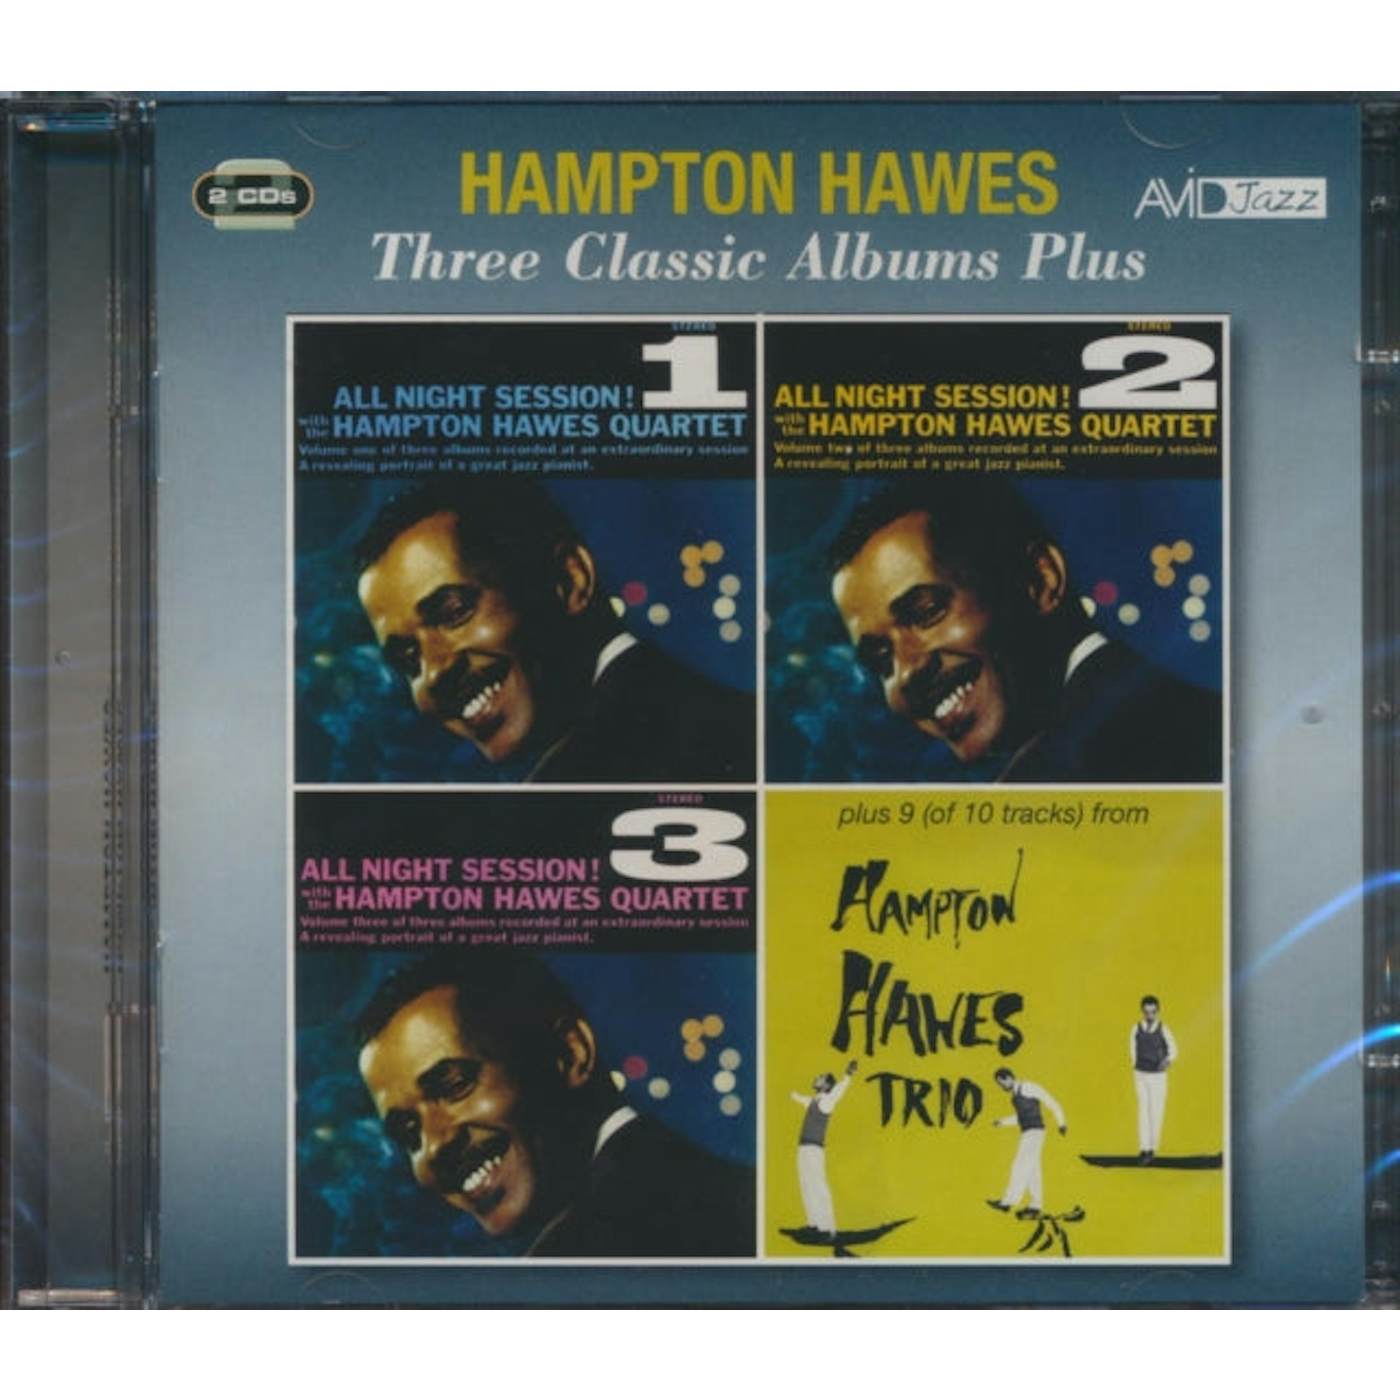 Hampton Hawes CD - Three Classic Albums Plus (All Night Session Vol 1 / All Night Session Vol 2 / All Night Session Vol 3)